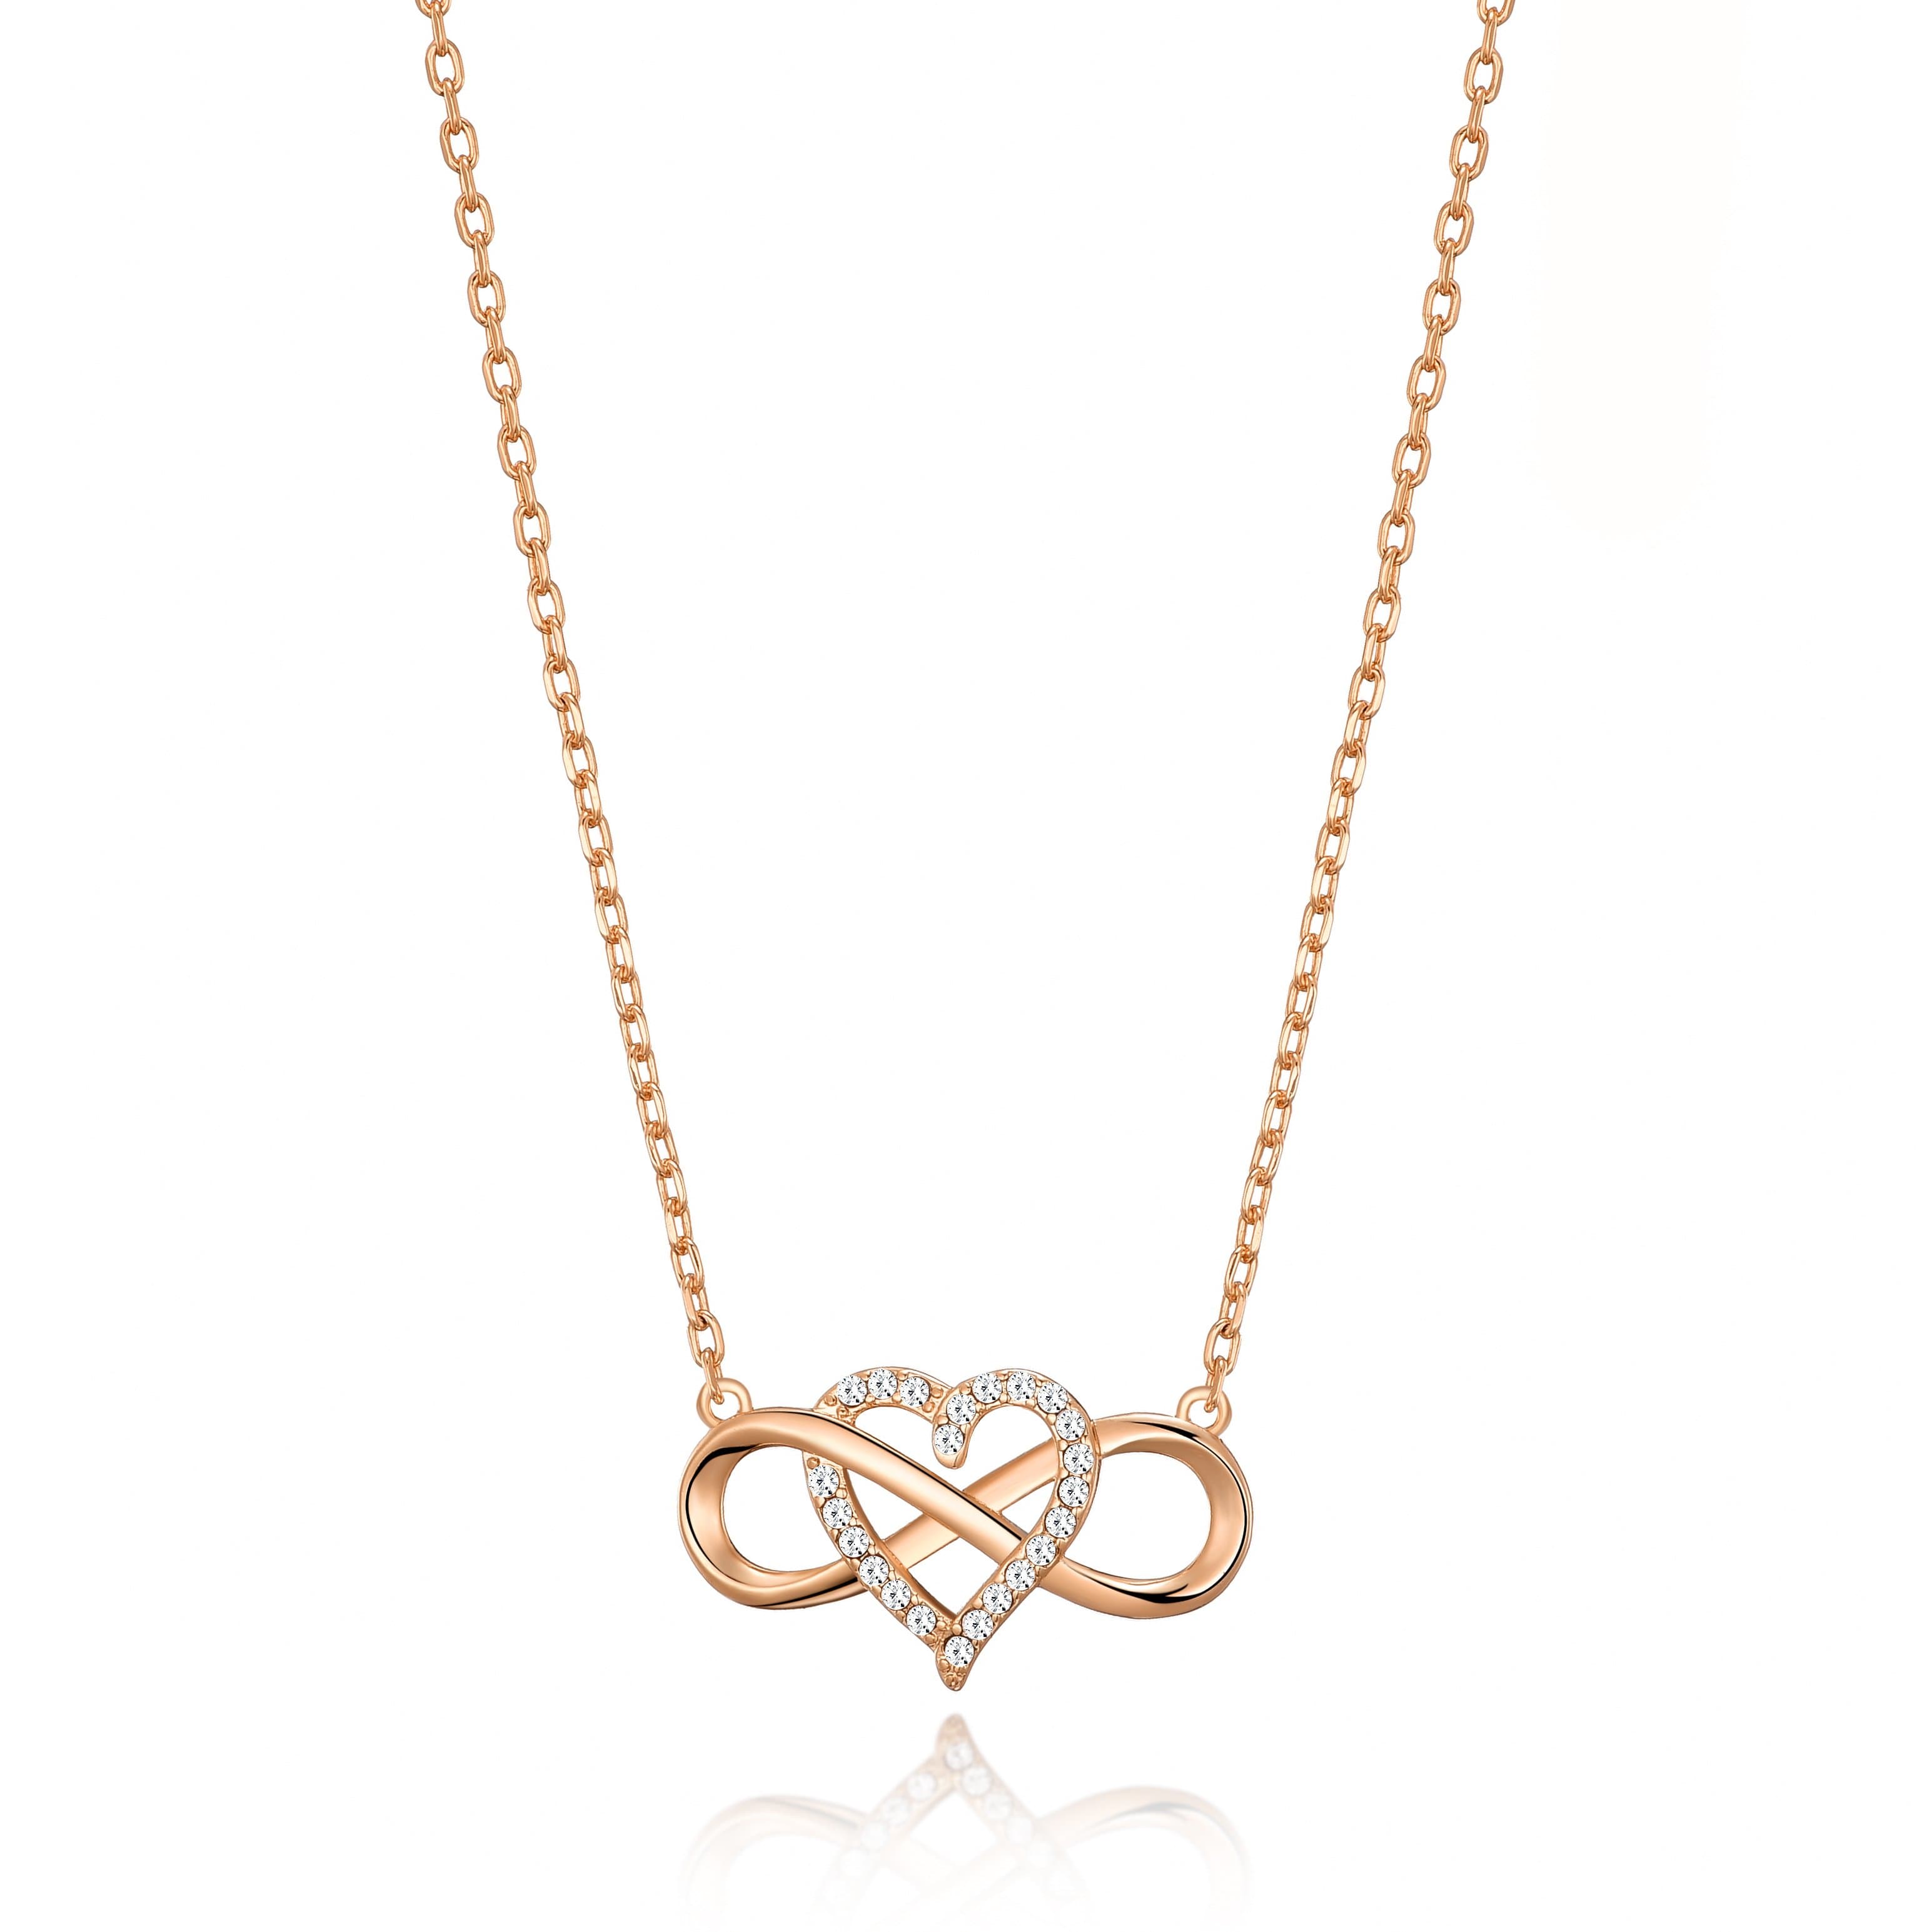 Buy/Send Giva 925 Silver Sparkling Infinity Pendant Necklace Online- FNP